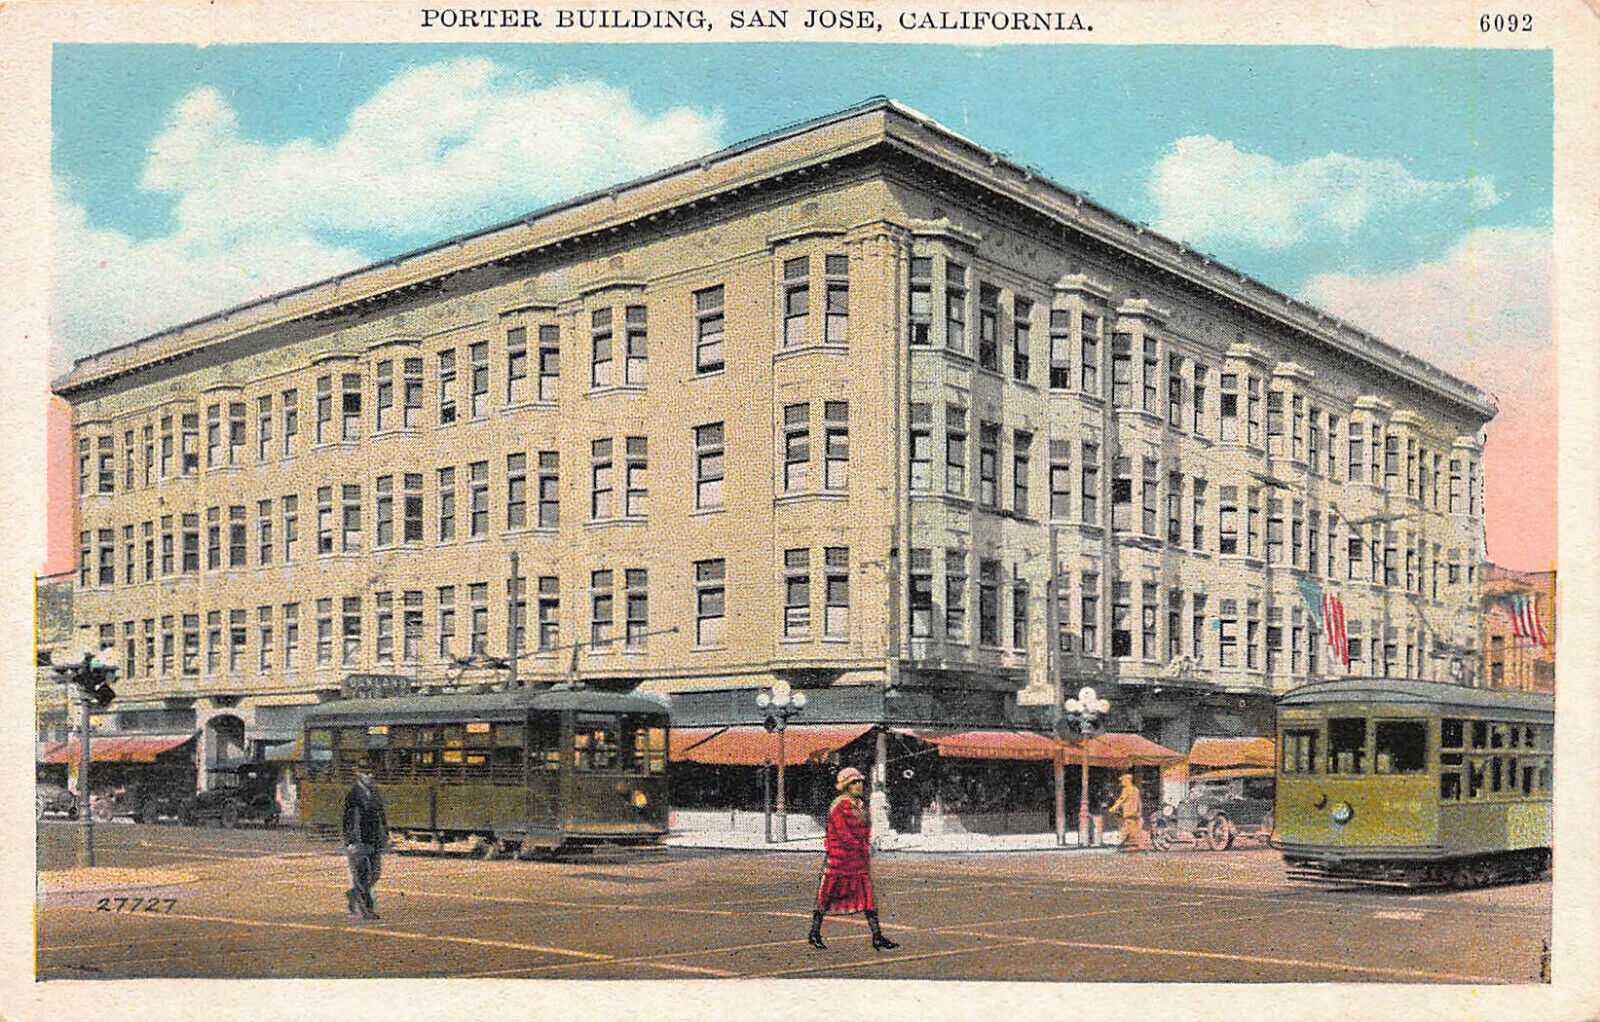 Porter Building, San Jose, California, Early Postcard, Showing 2 Trolley Cars